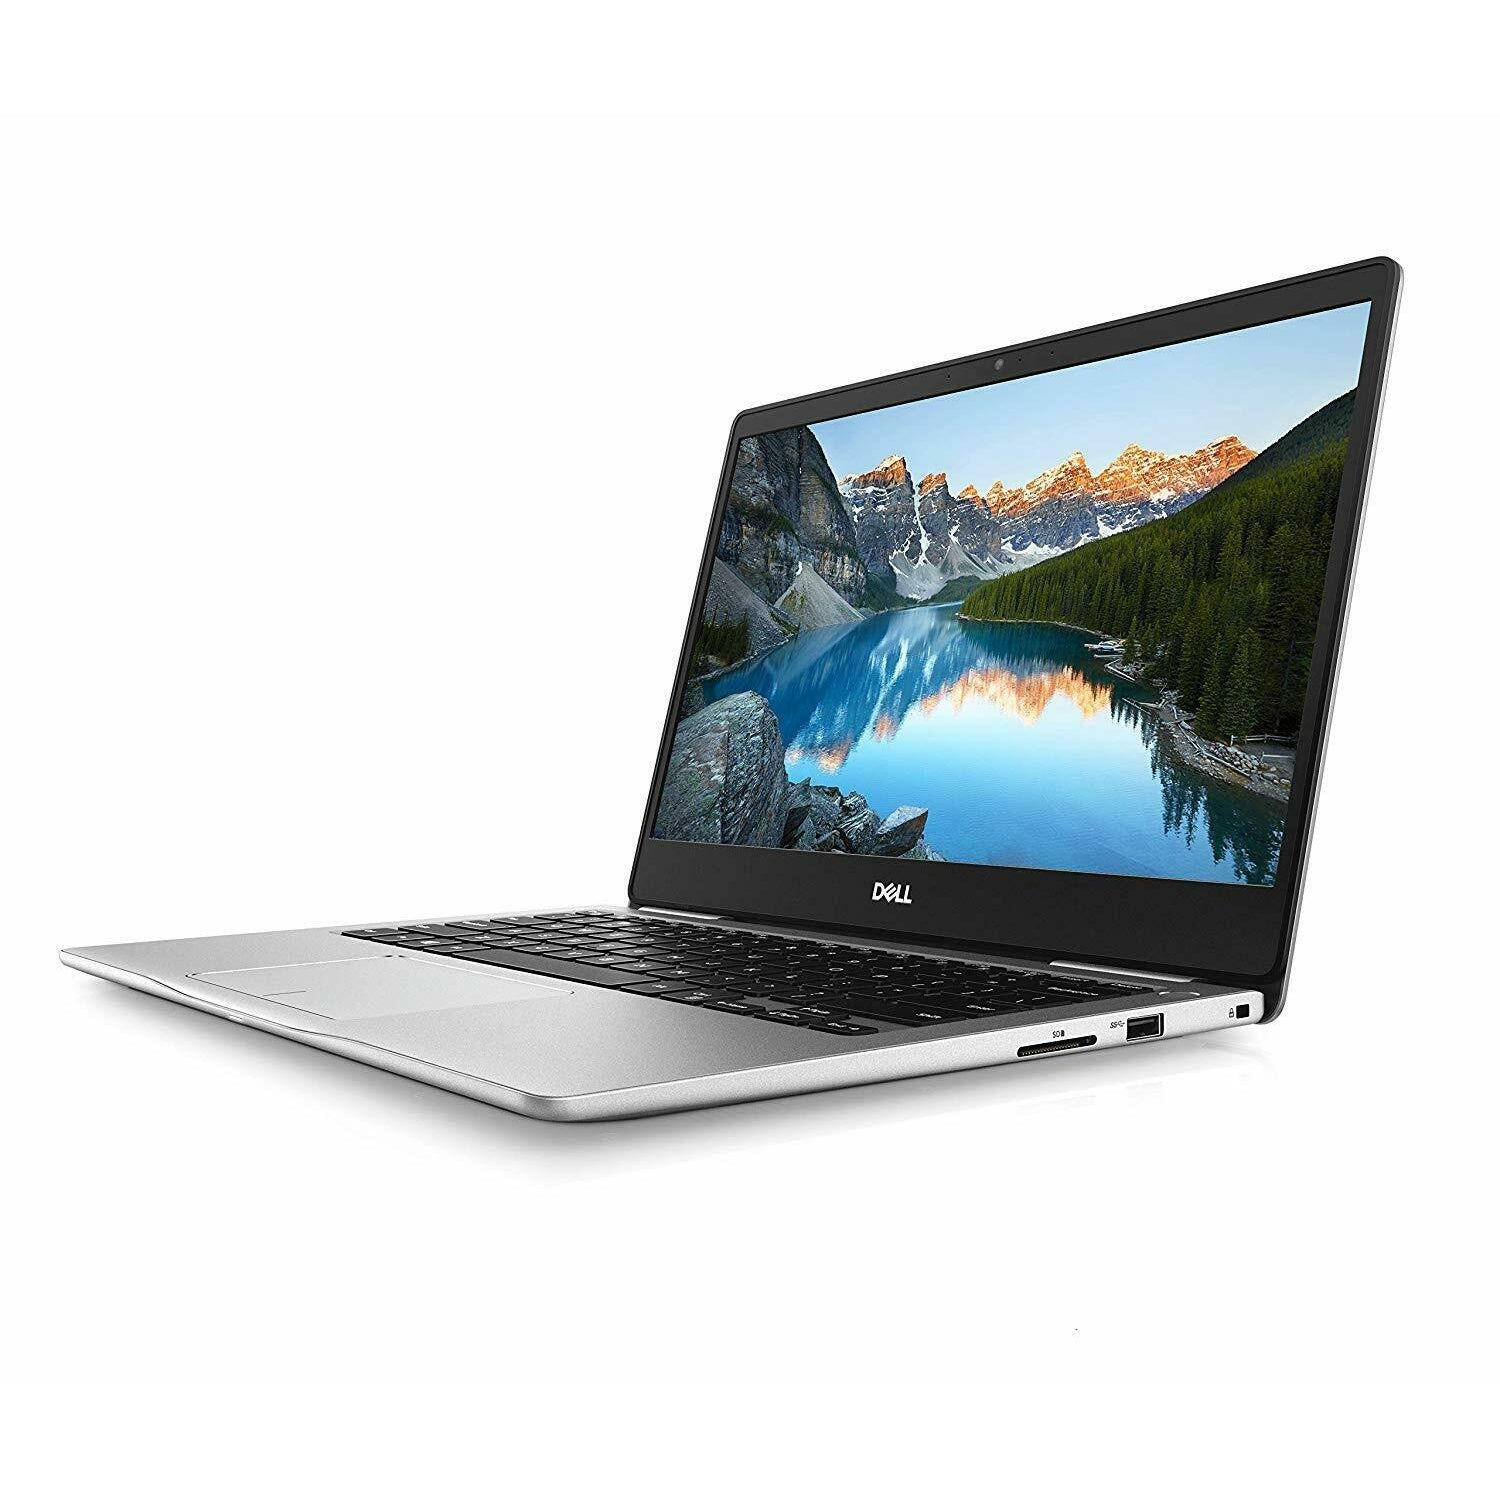 Dell Inspiron 13 7370 Laptop Intel Core i5-8250u 8GB RAM 256GB SSD 13.3” - Silver